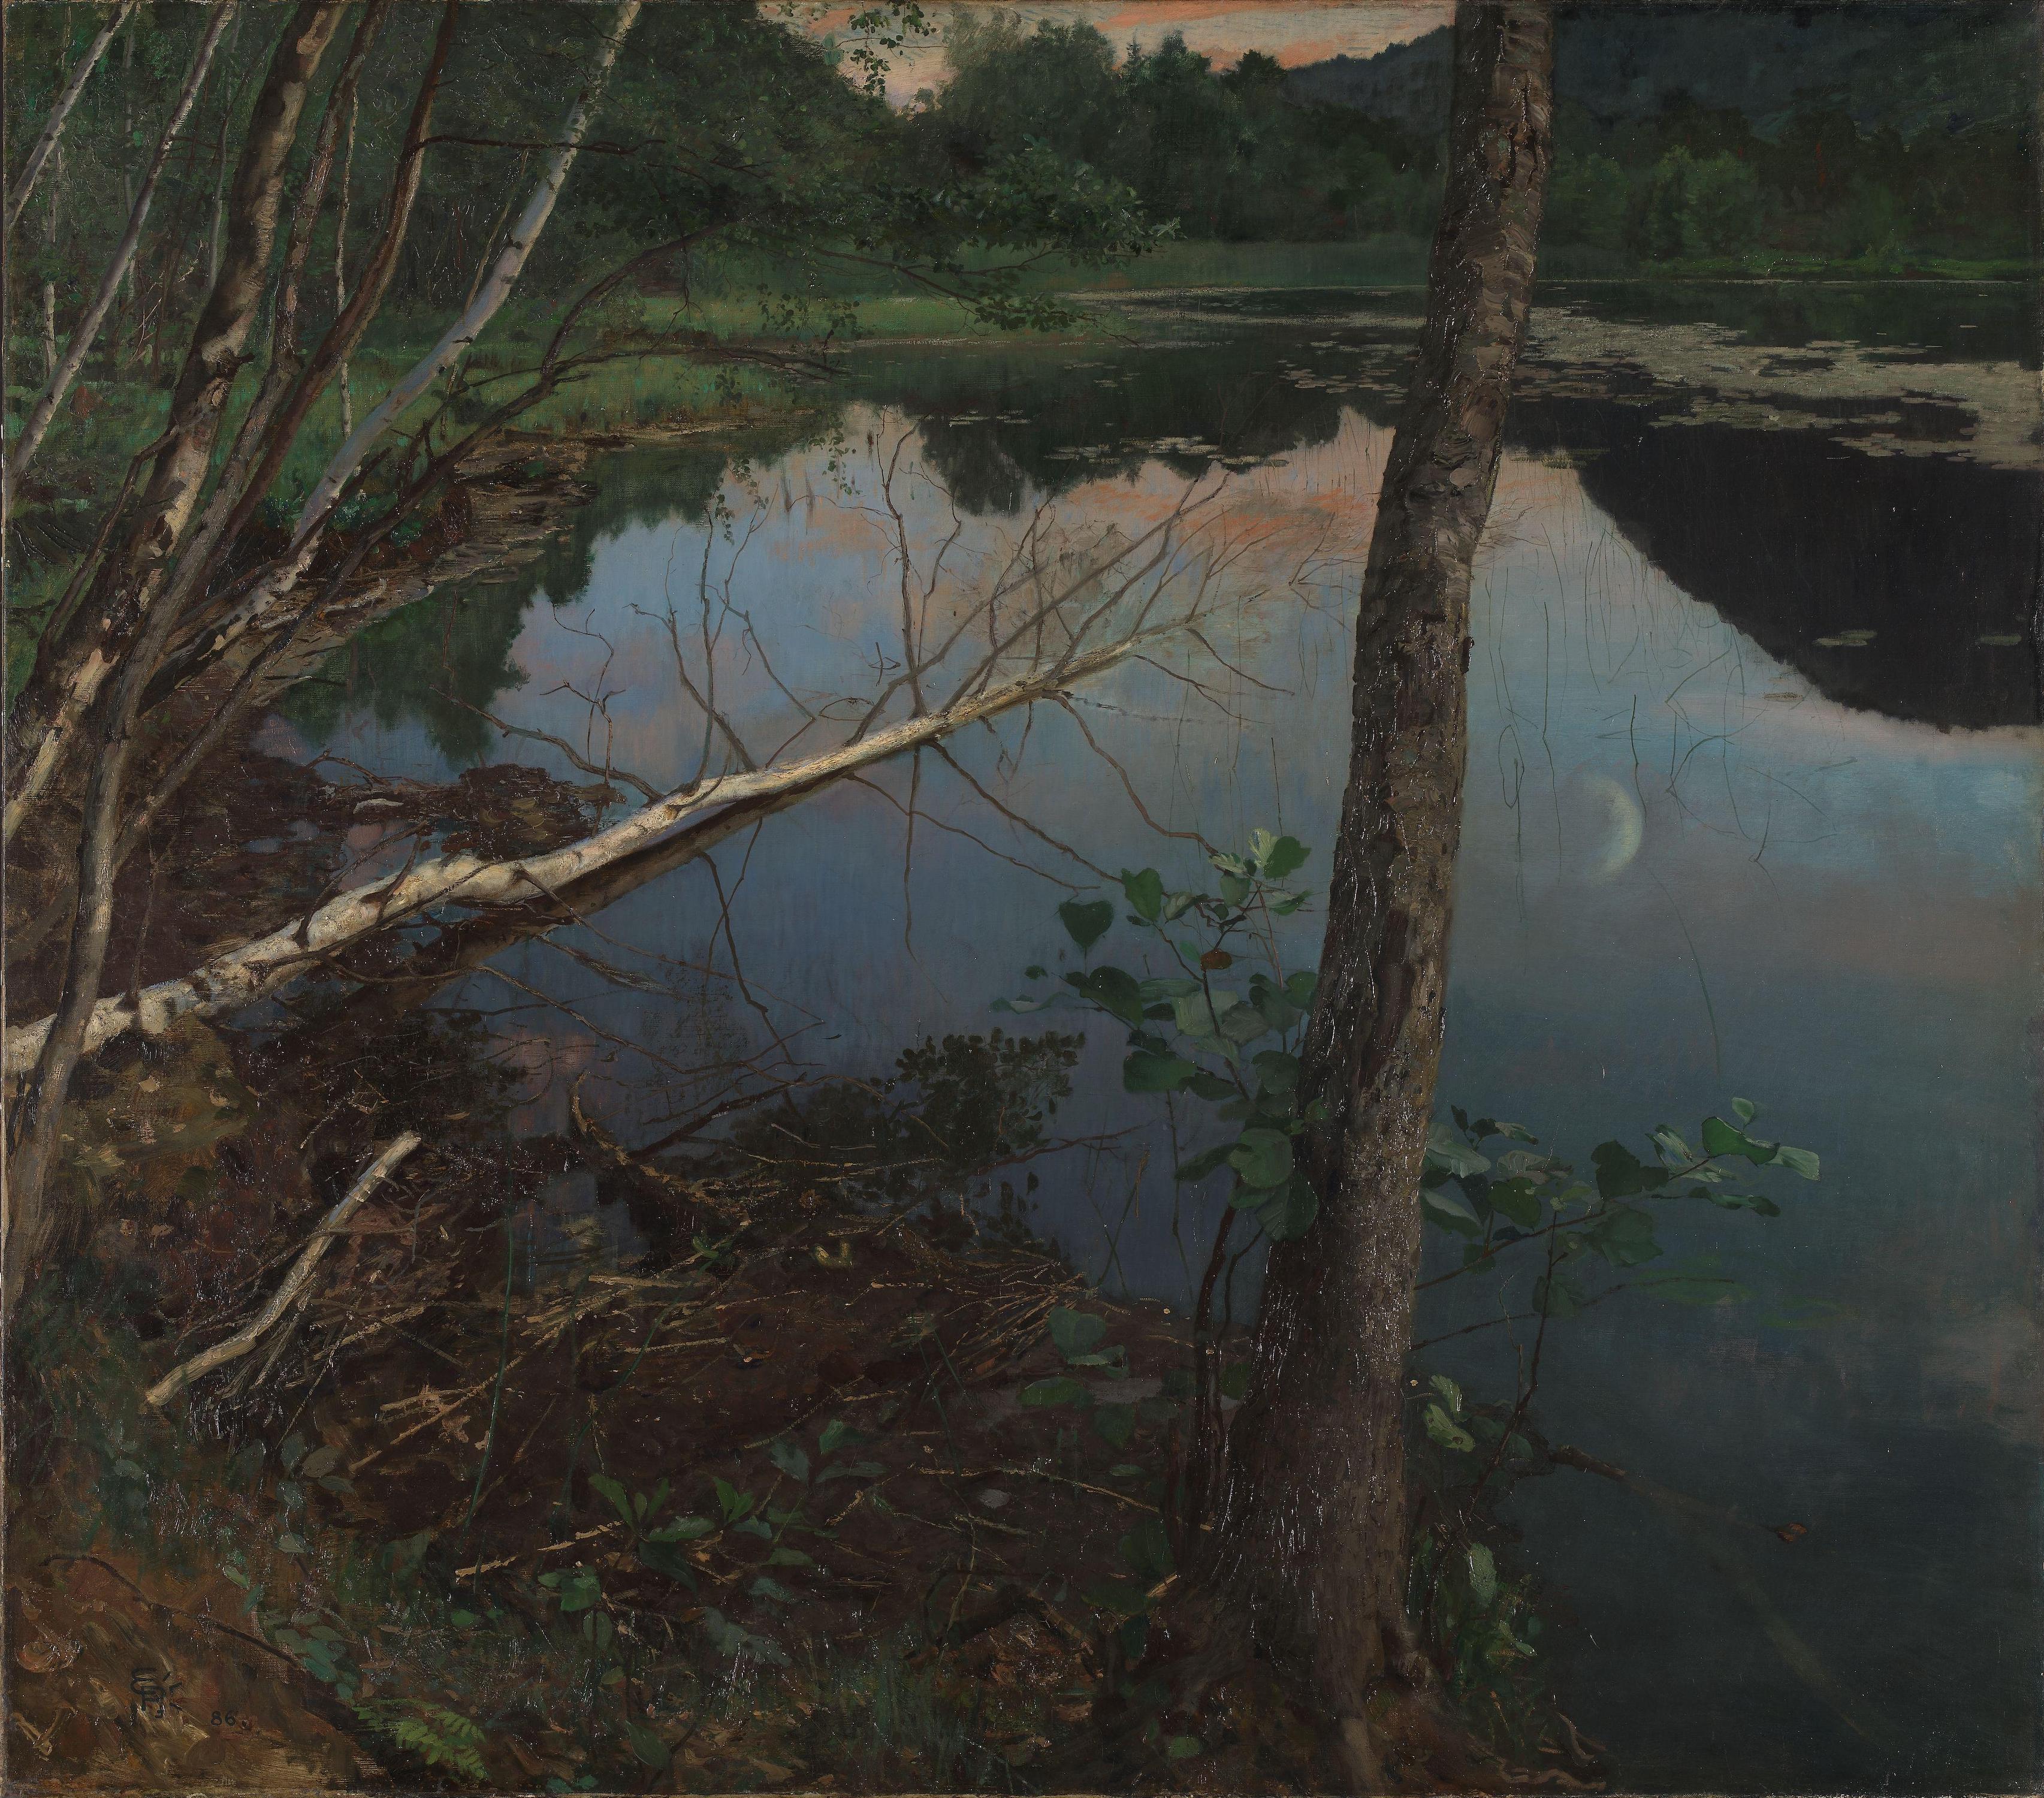 夏の夜 by Eilif Peterssen - 1886年 - 151 x 133 cm 